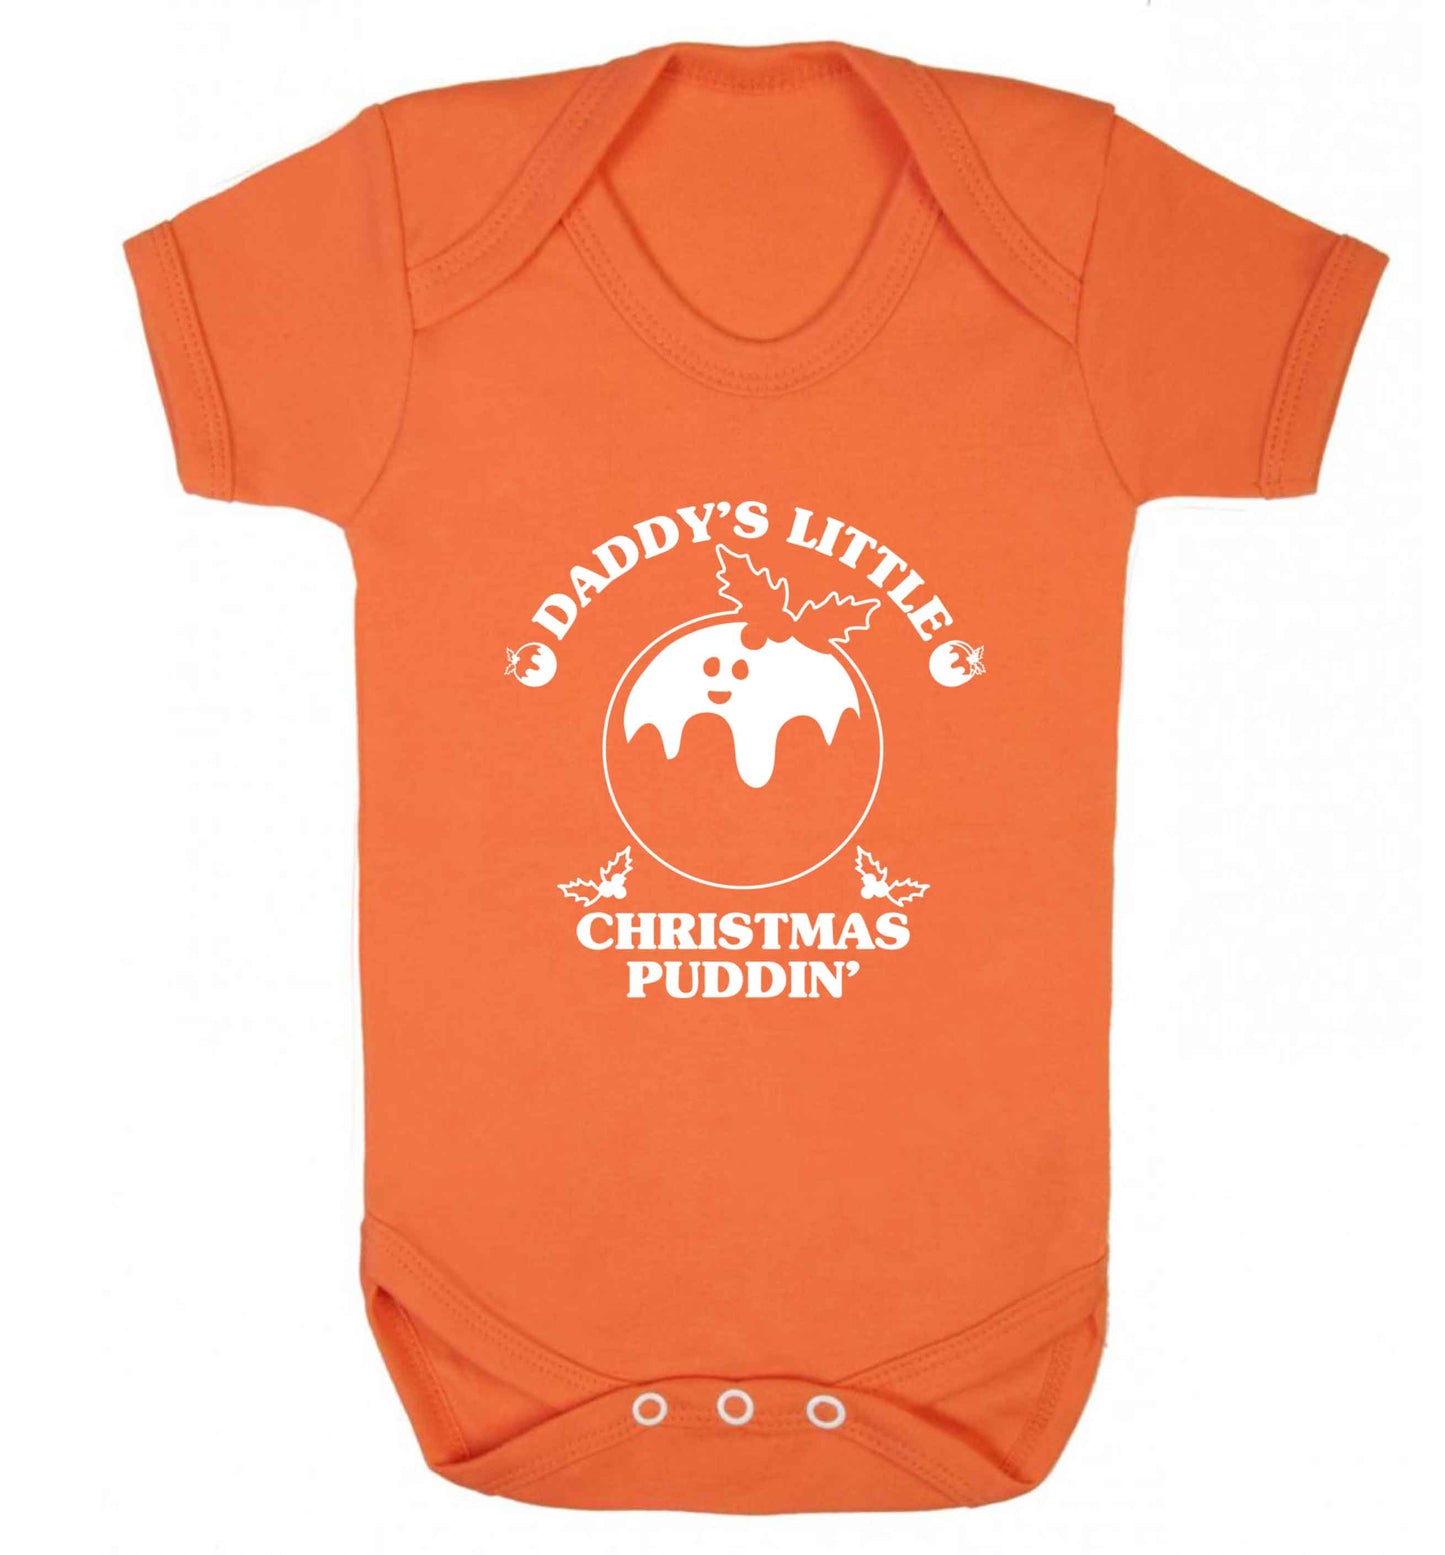 Daddy's little Christmas puddin' Baby Vest orange 18-24 months